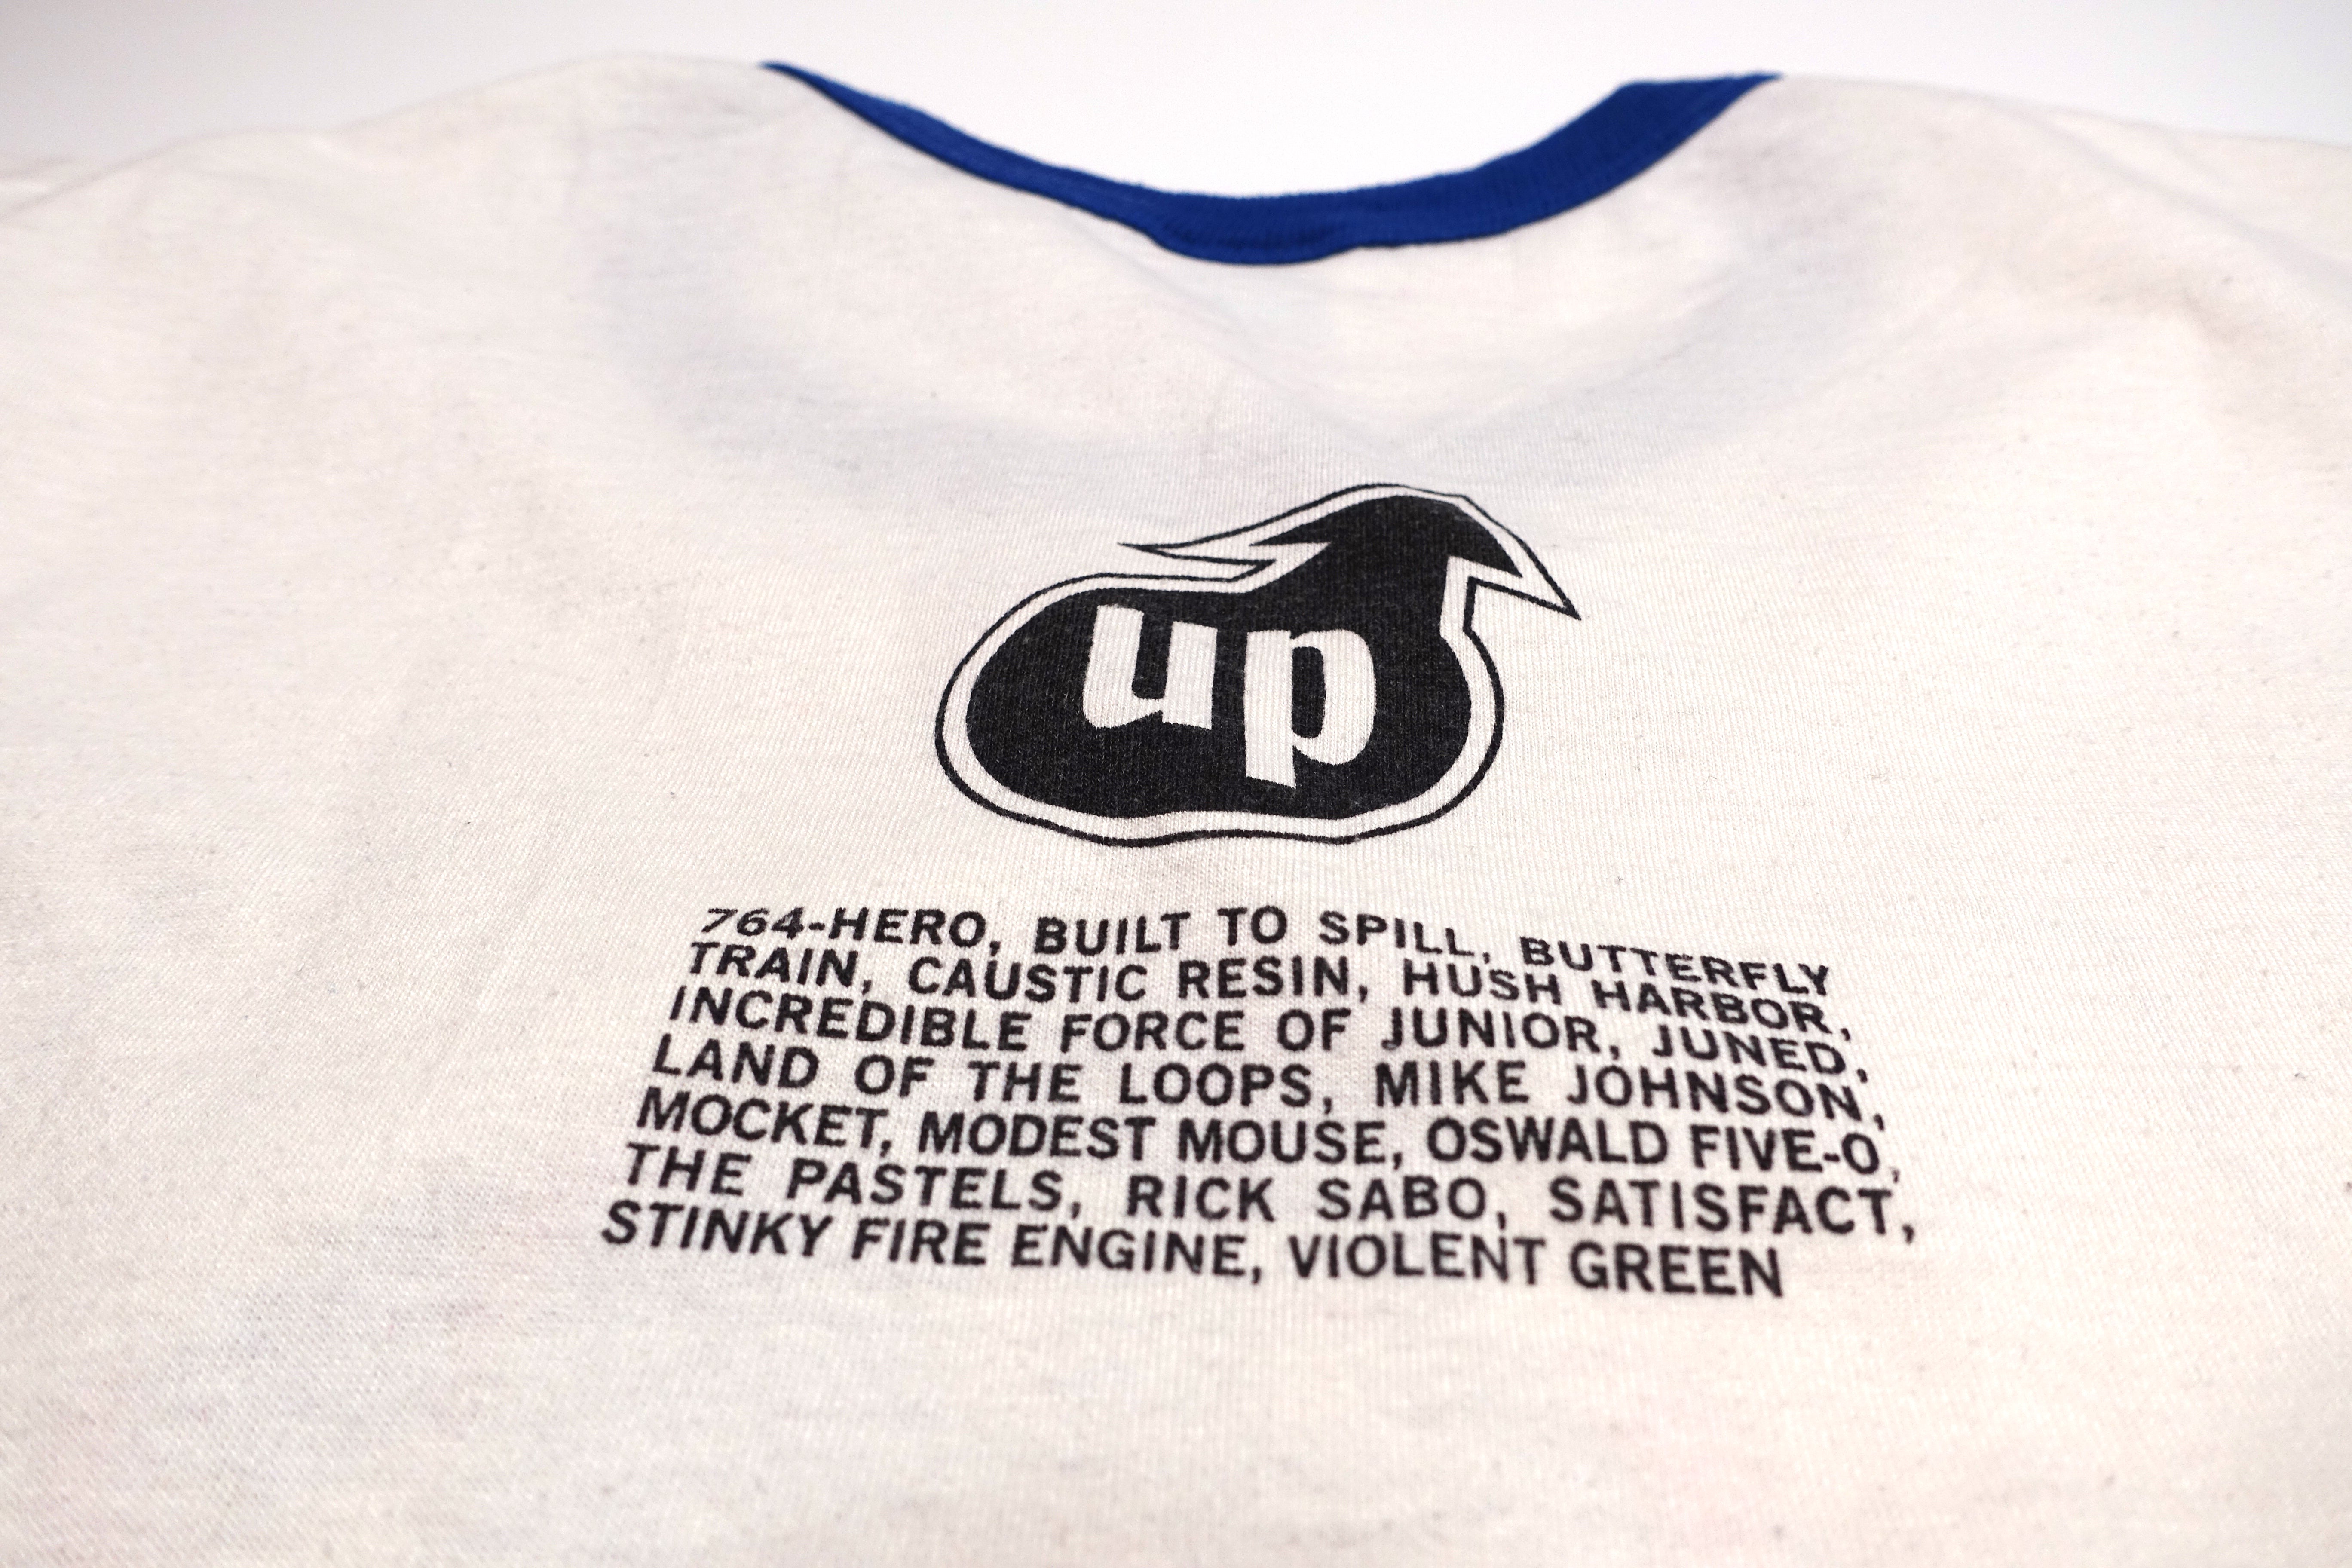 Up Records - Joe Newton Robot 1996 Shirt Size XL